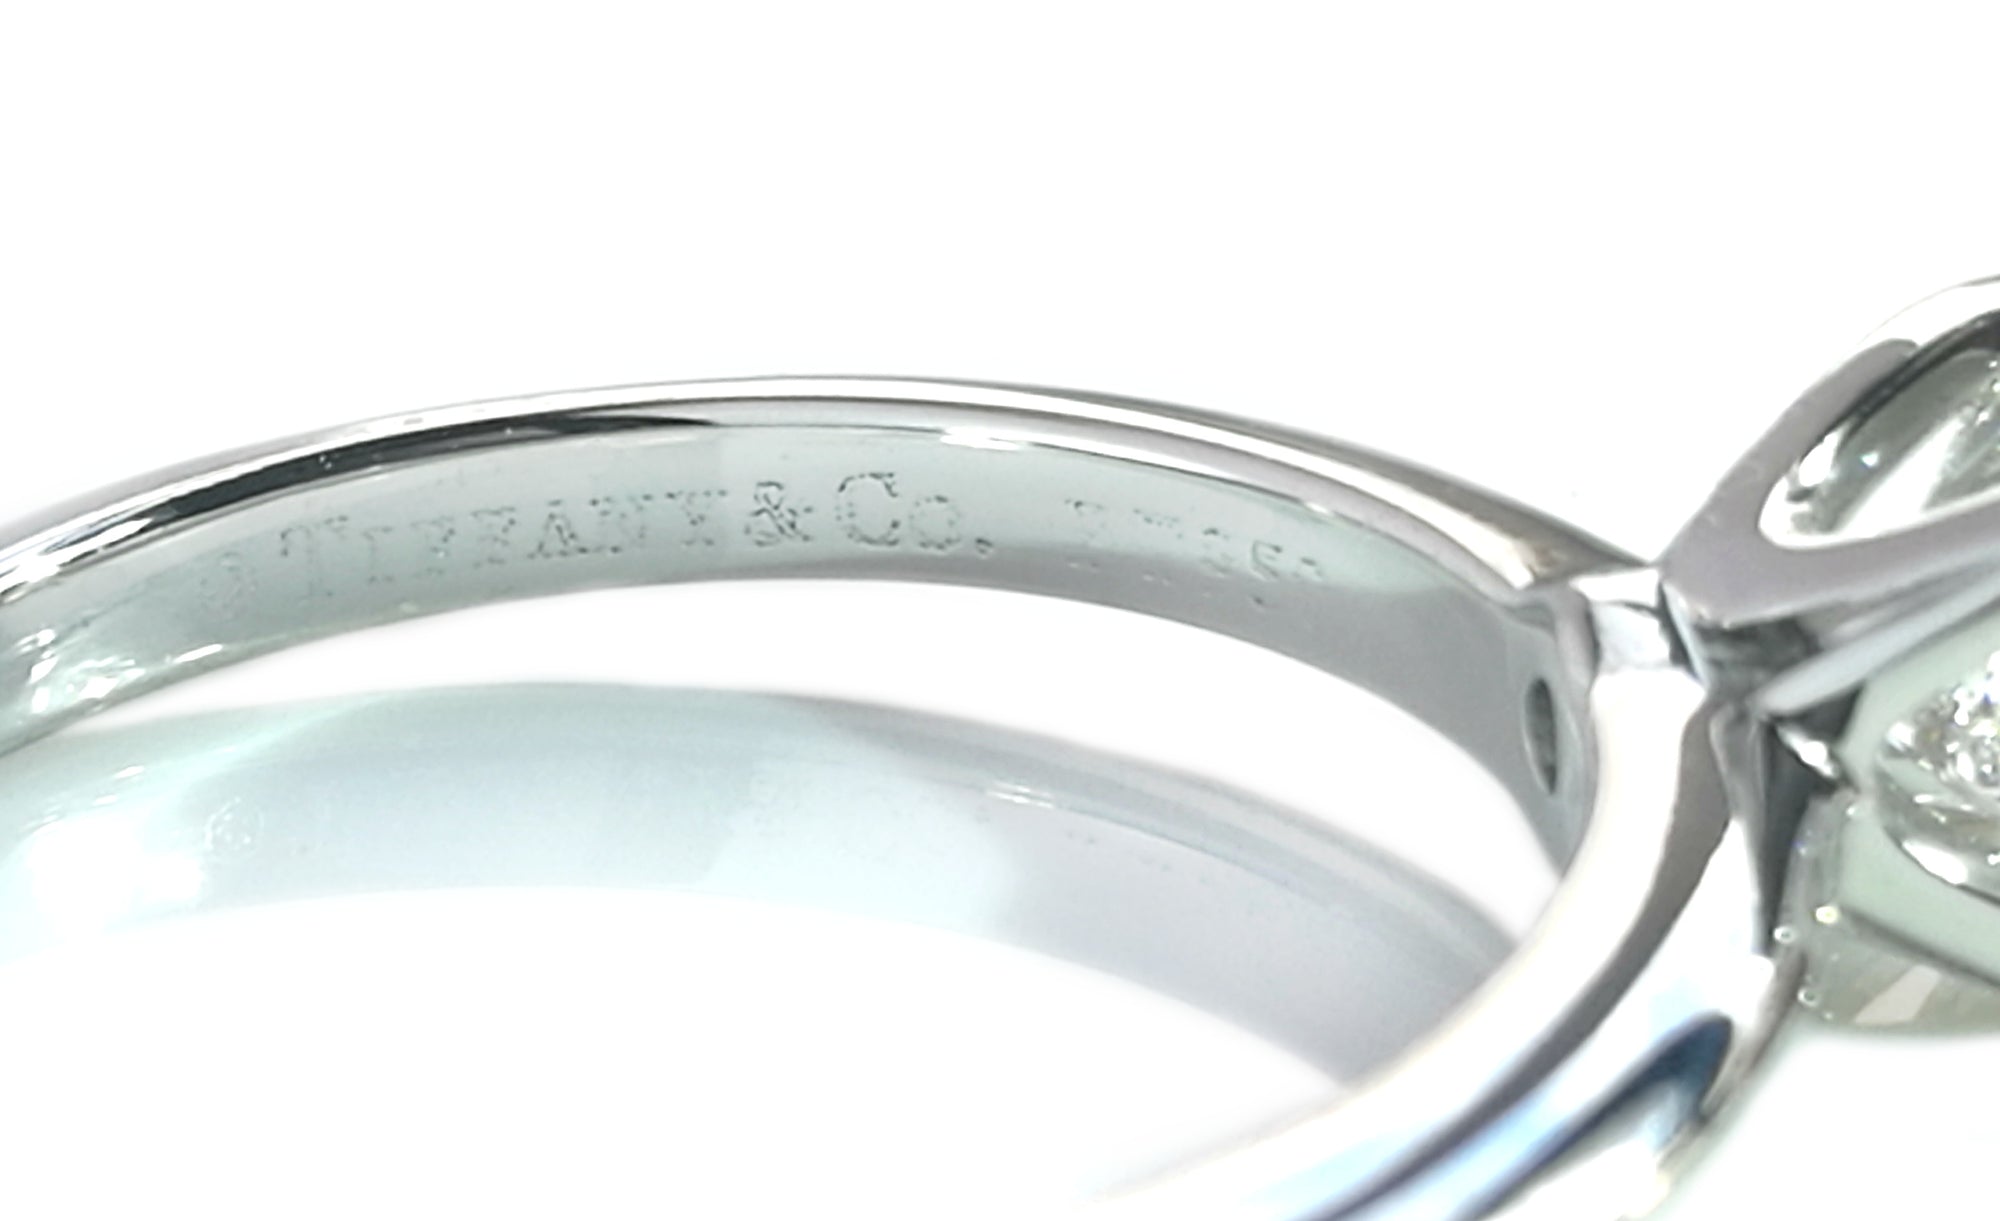 Tiffany & Co. 0.41ct G/SI1 Princess Cut Diamond Engagement Ring